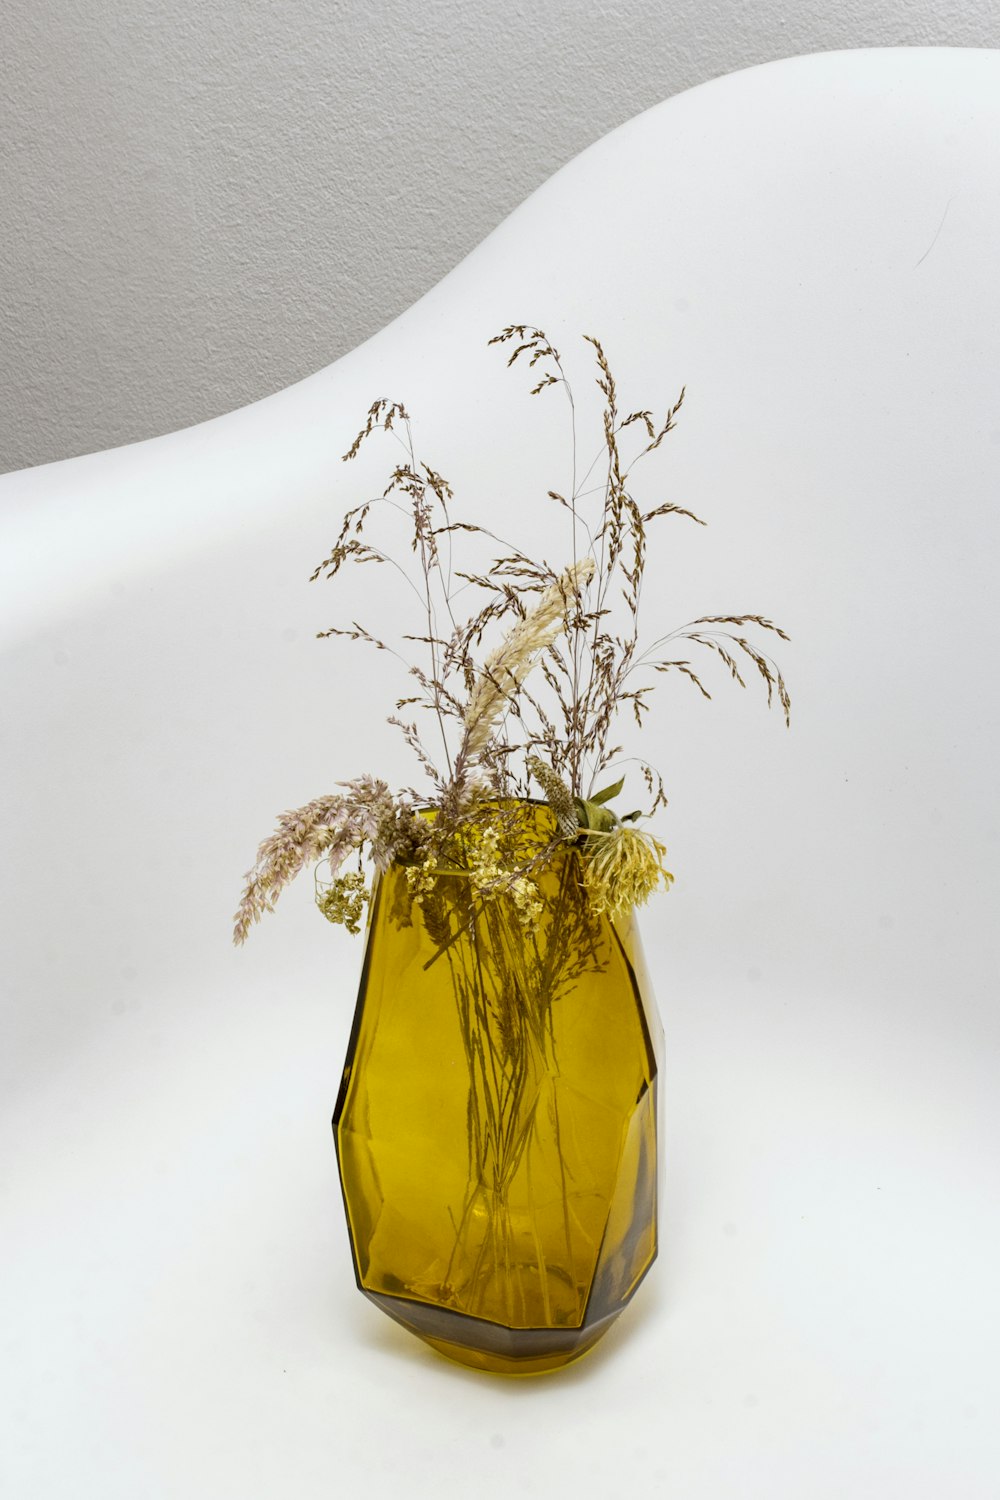 grasses in yellow translucent glass vase